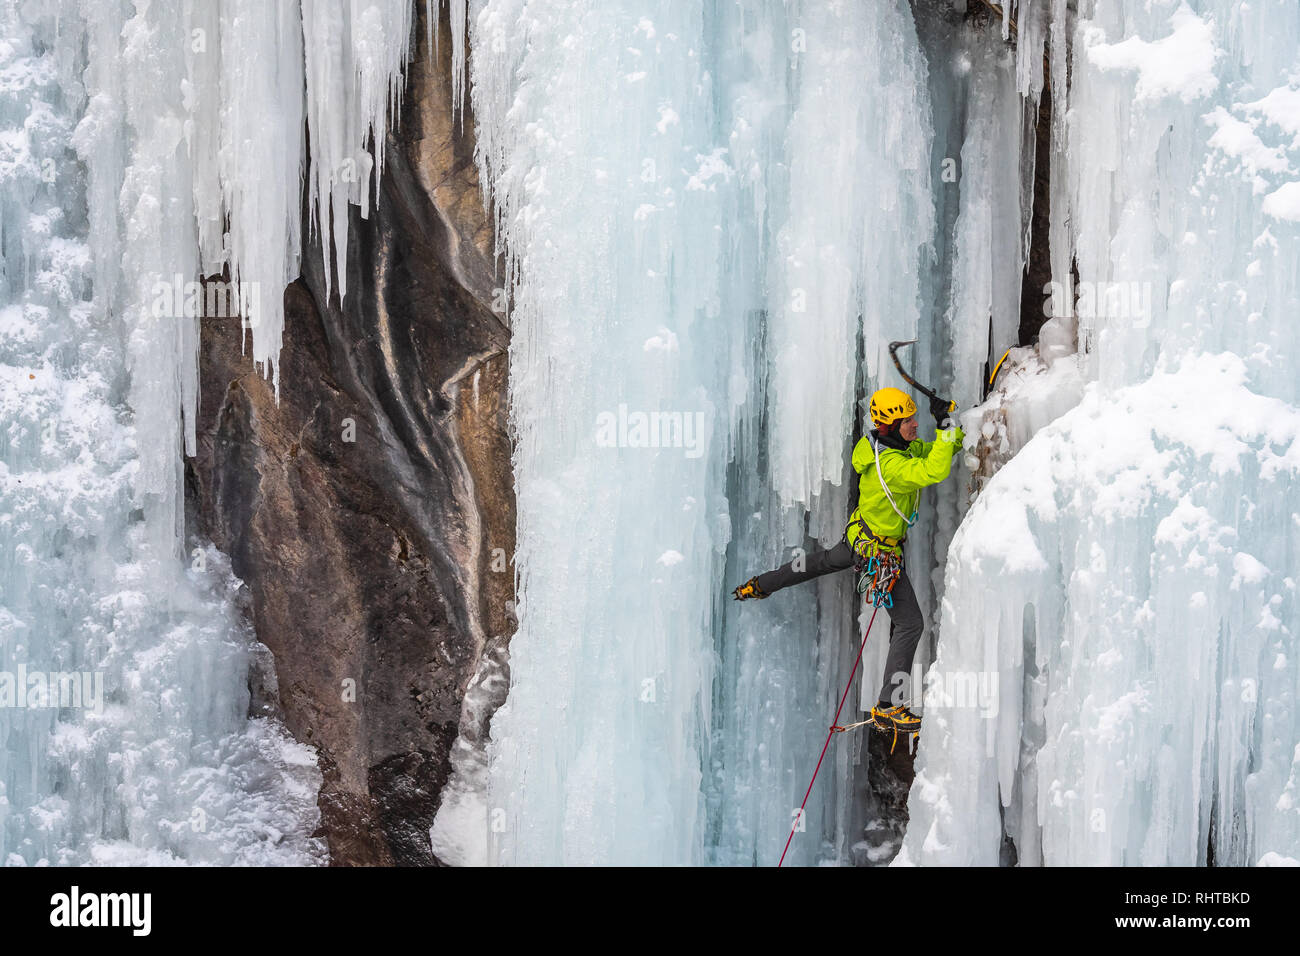 Steve House climbing a route at Ouray Ice Park Colorado Stock Photo